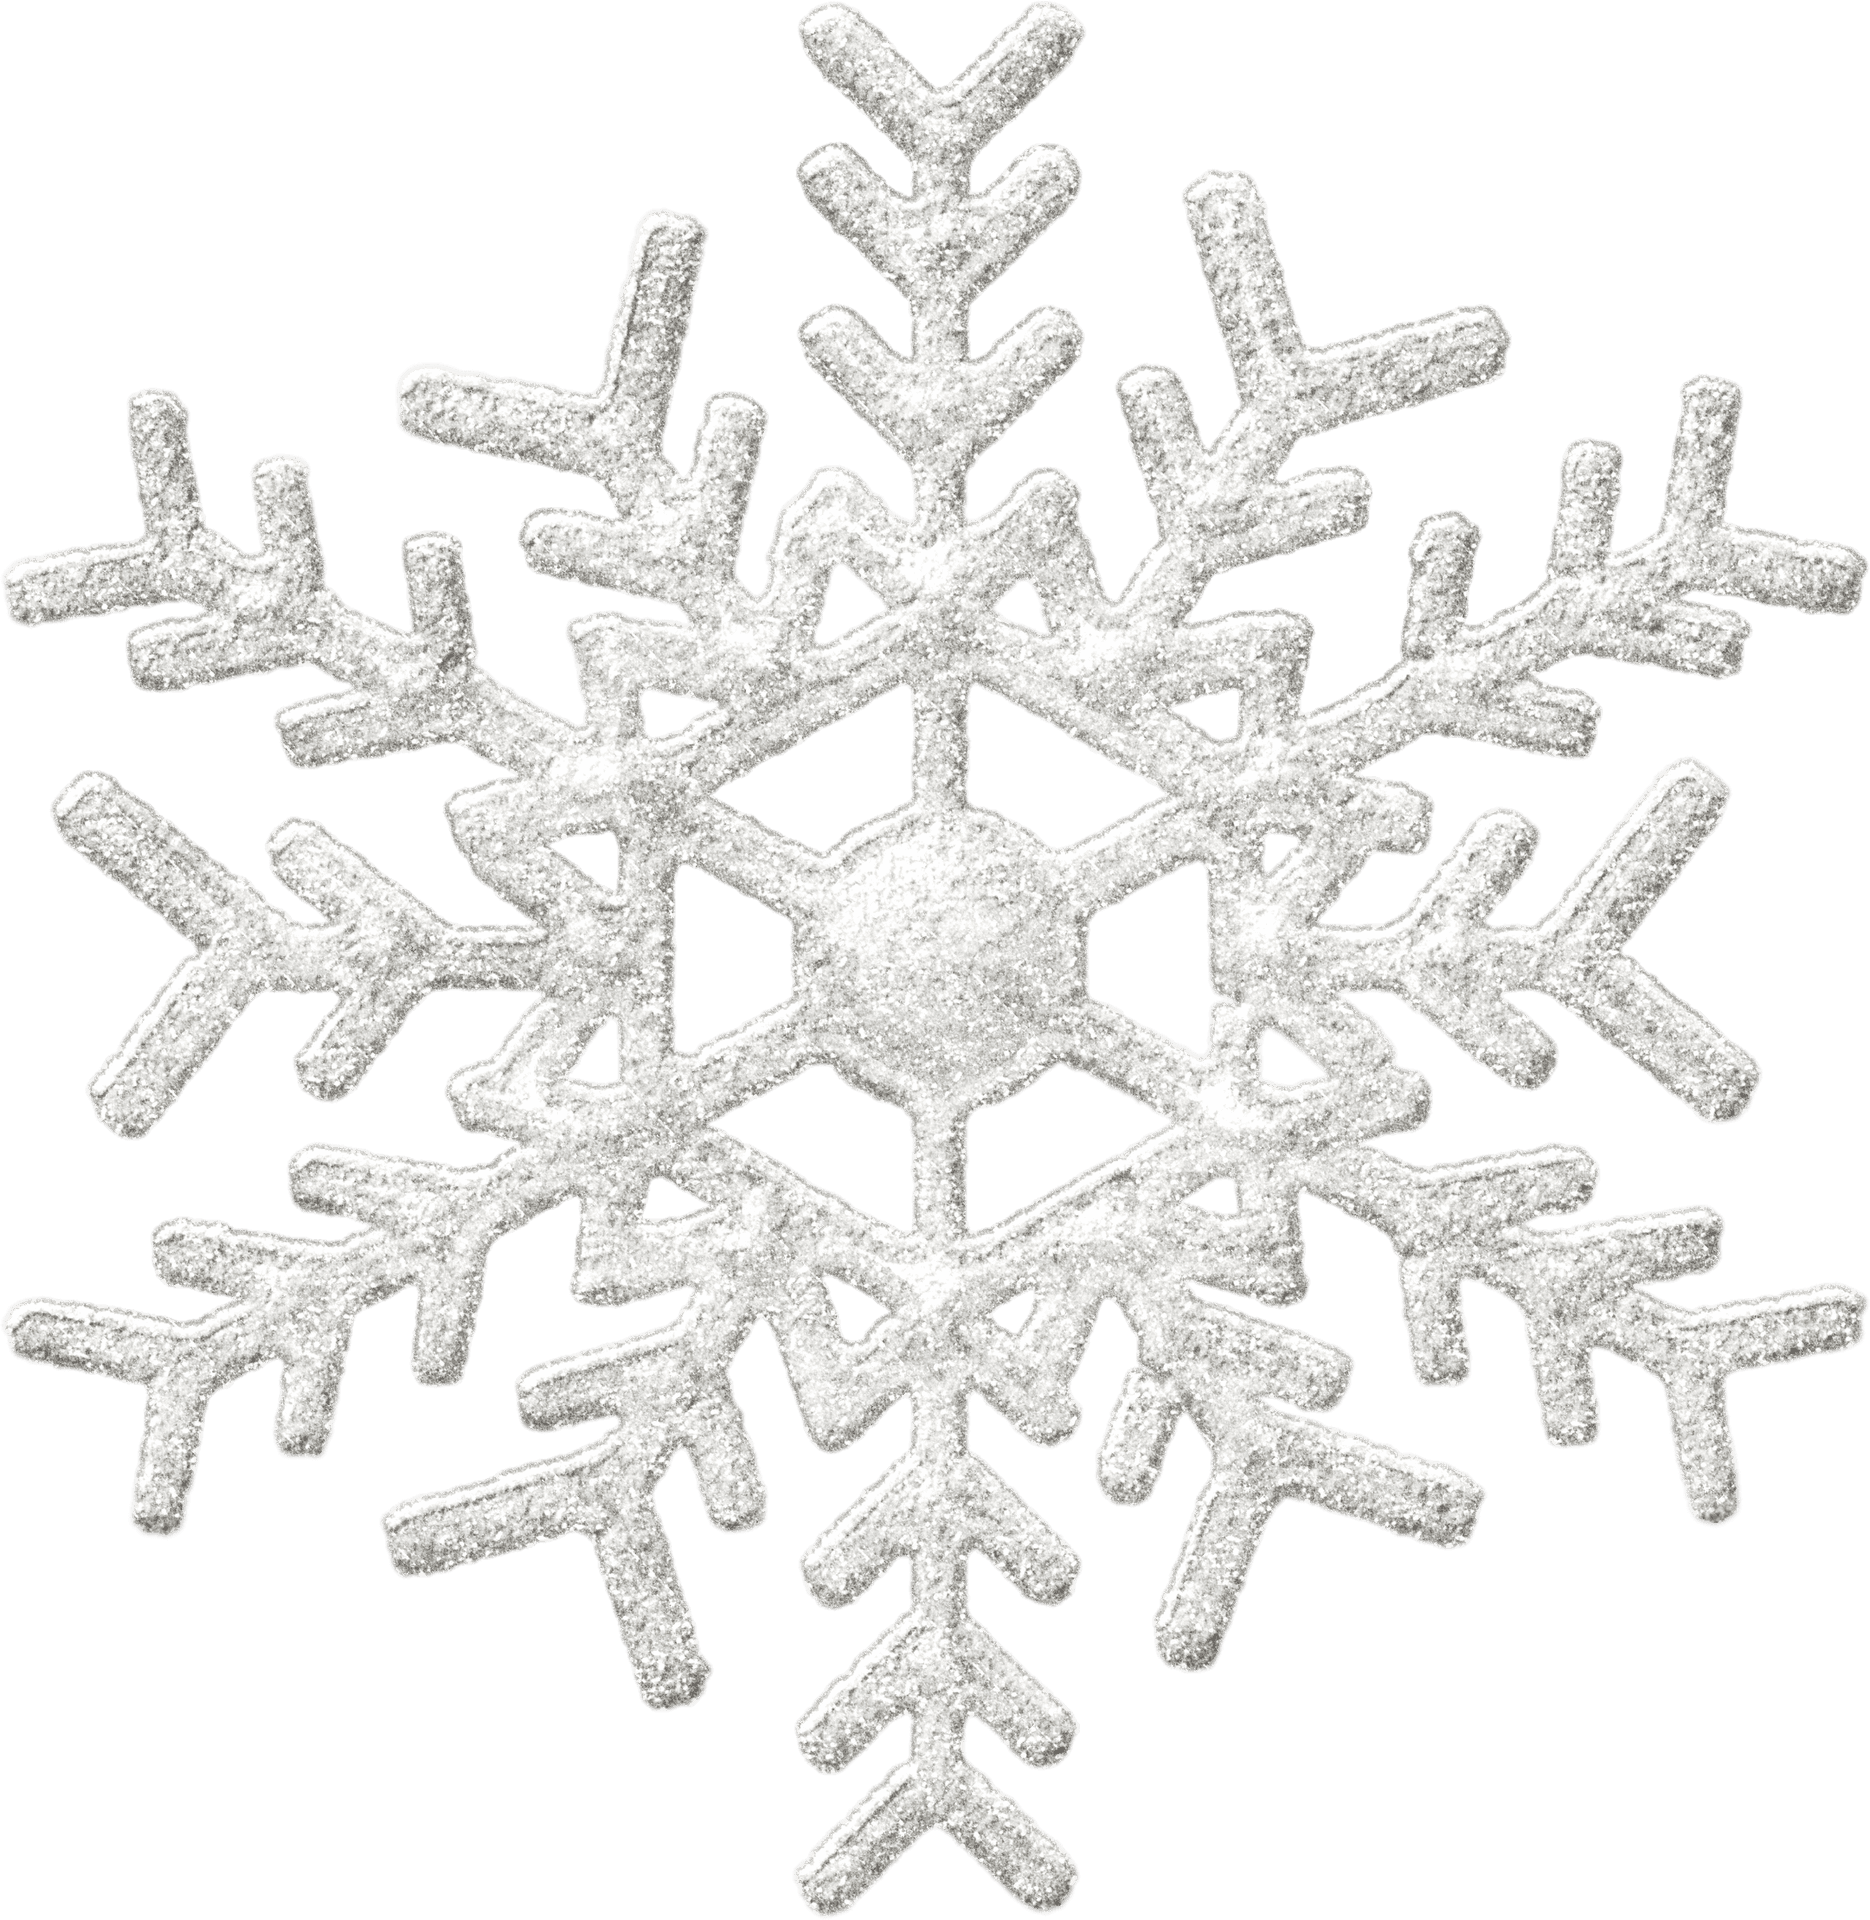 Textured Snowflake Illustration PNG image